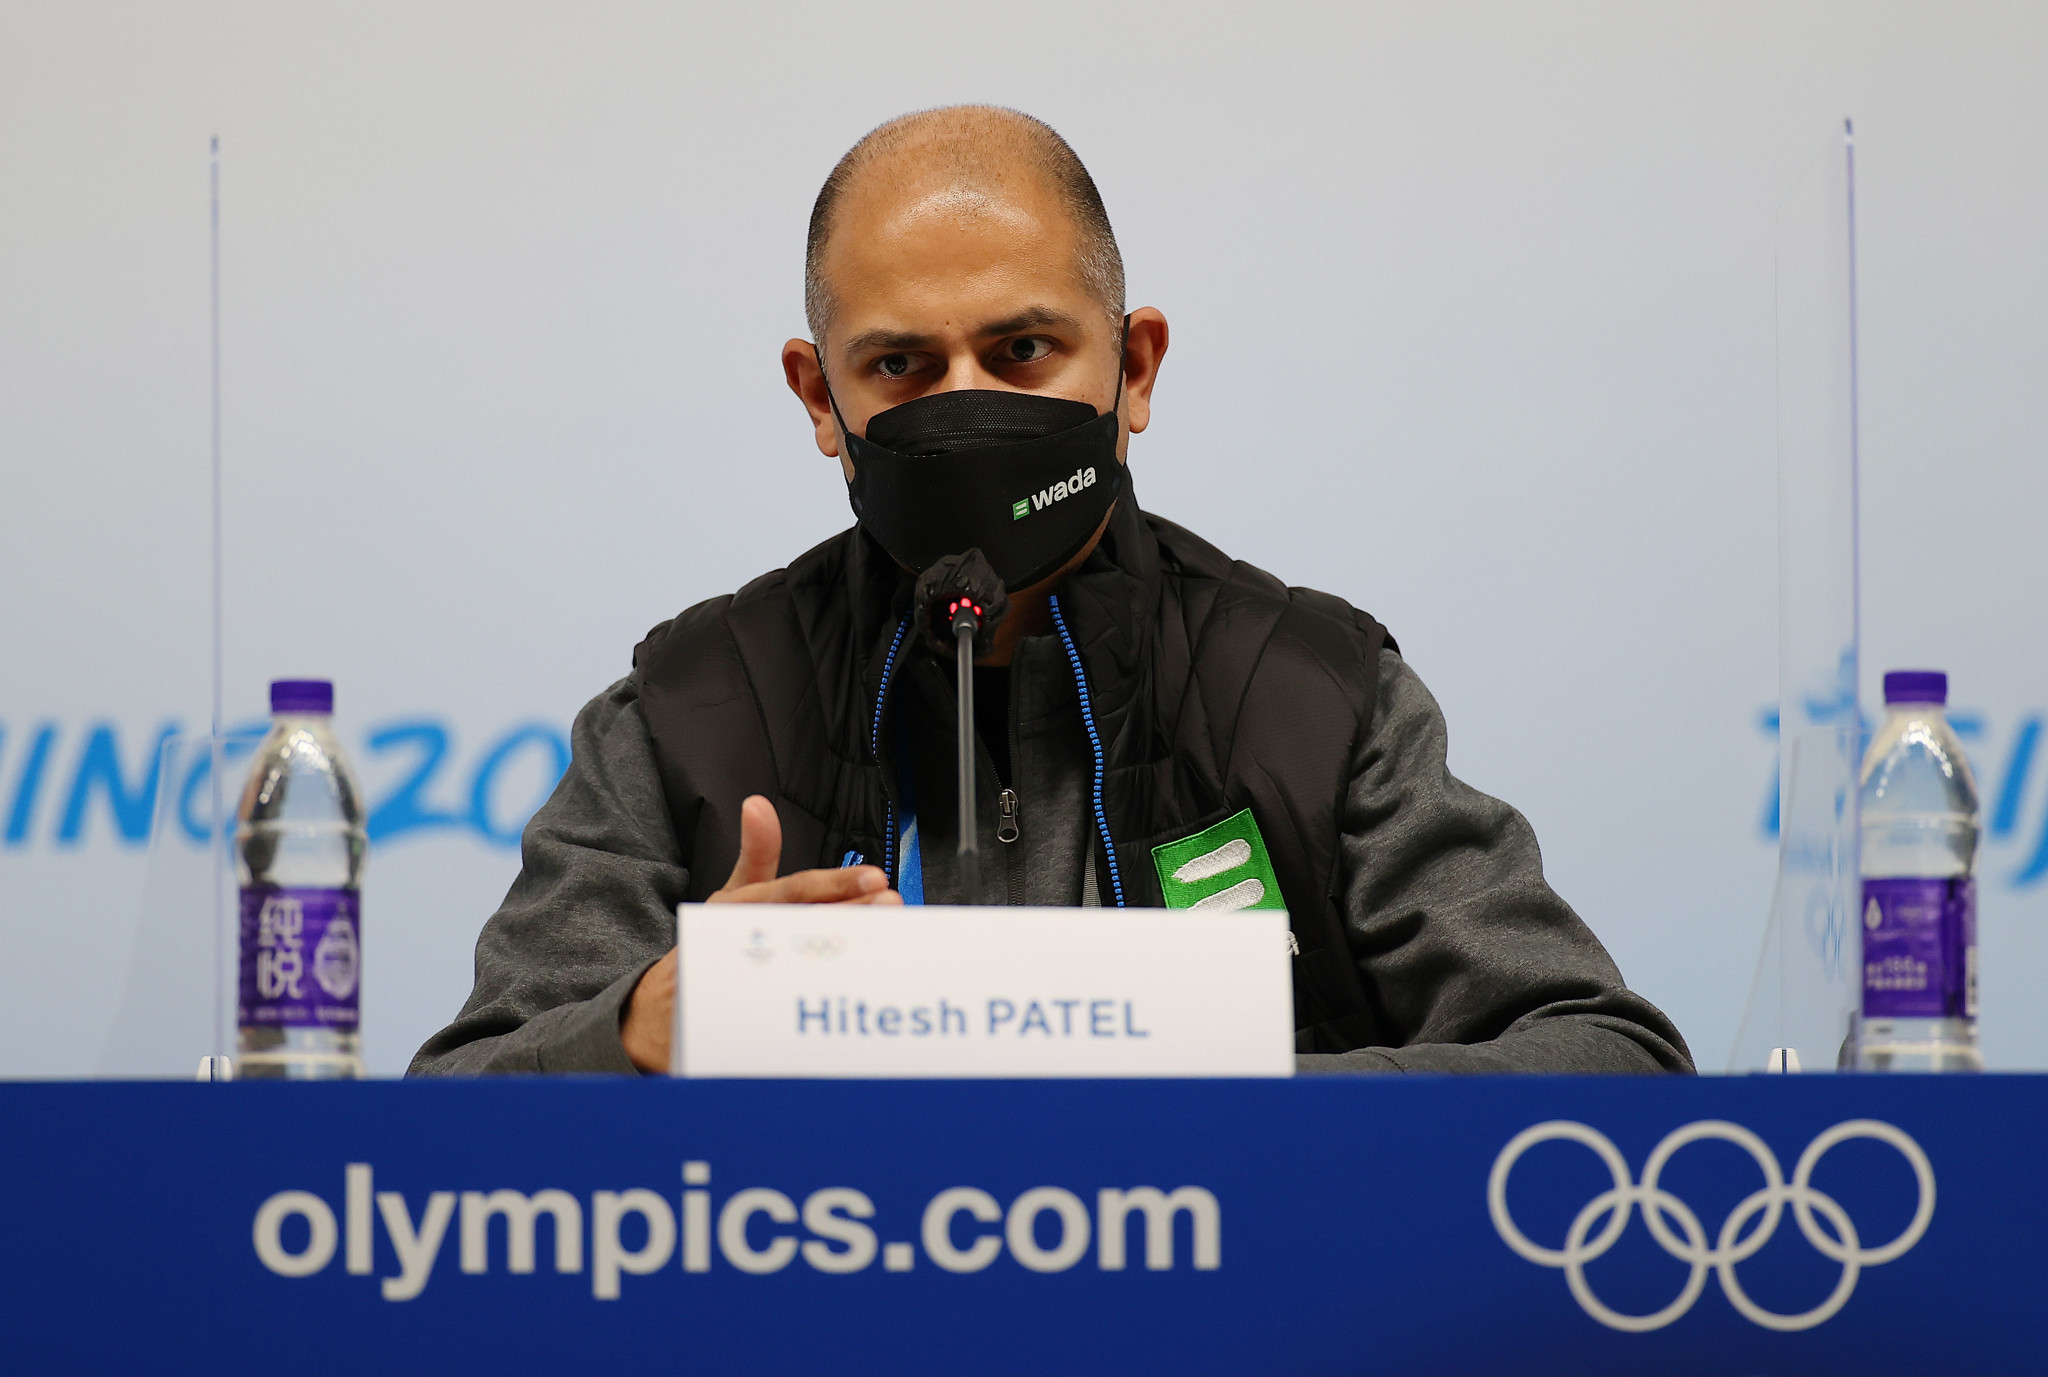 Chair Hitesh Patel said WADA's Beijing 2022 IO Team 